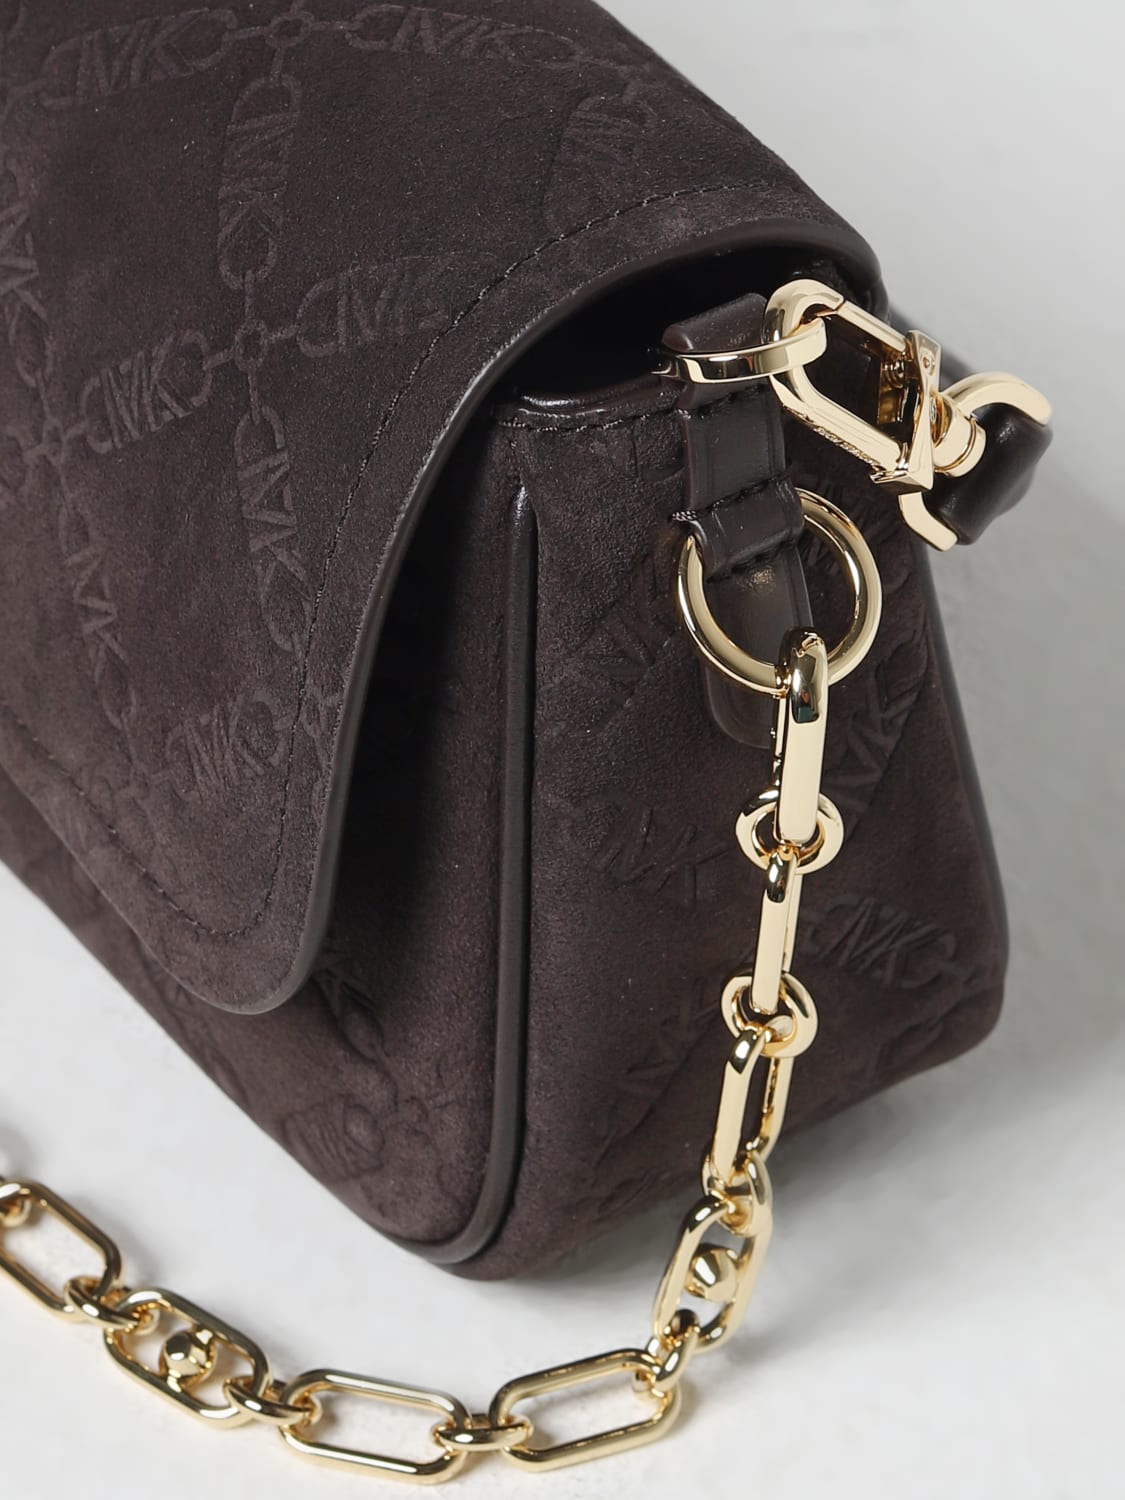 MICHAEL KORS: shoulder bag for woman - Brown  Michael Kors shoulder bag  30F3G7PC2S online at